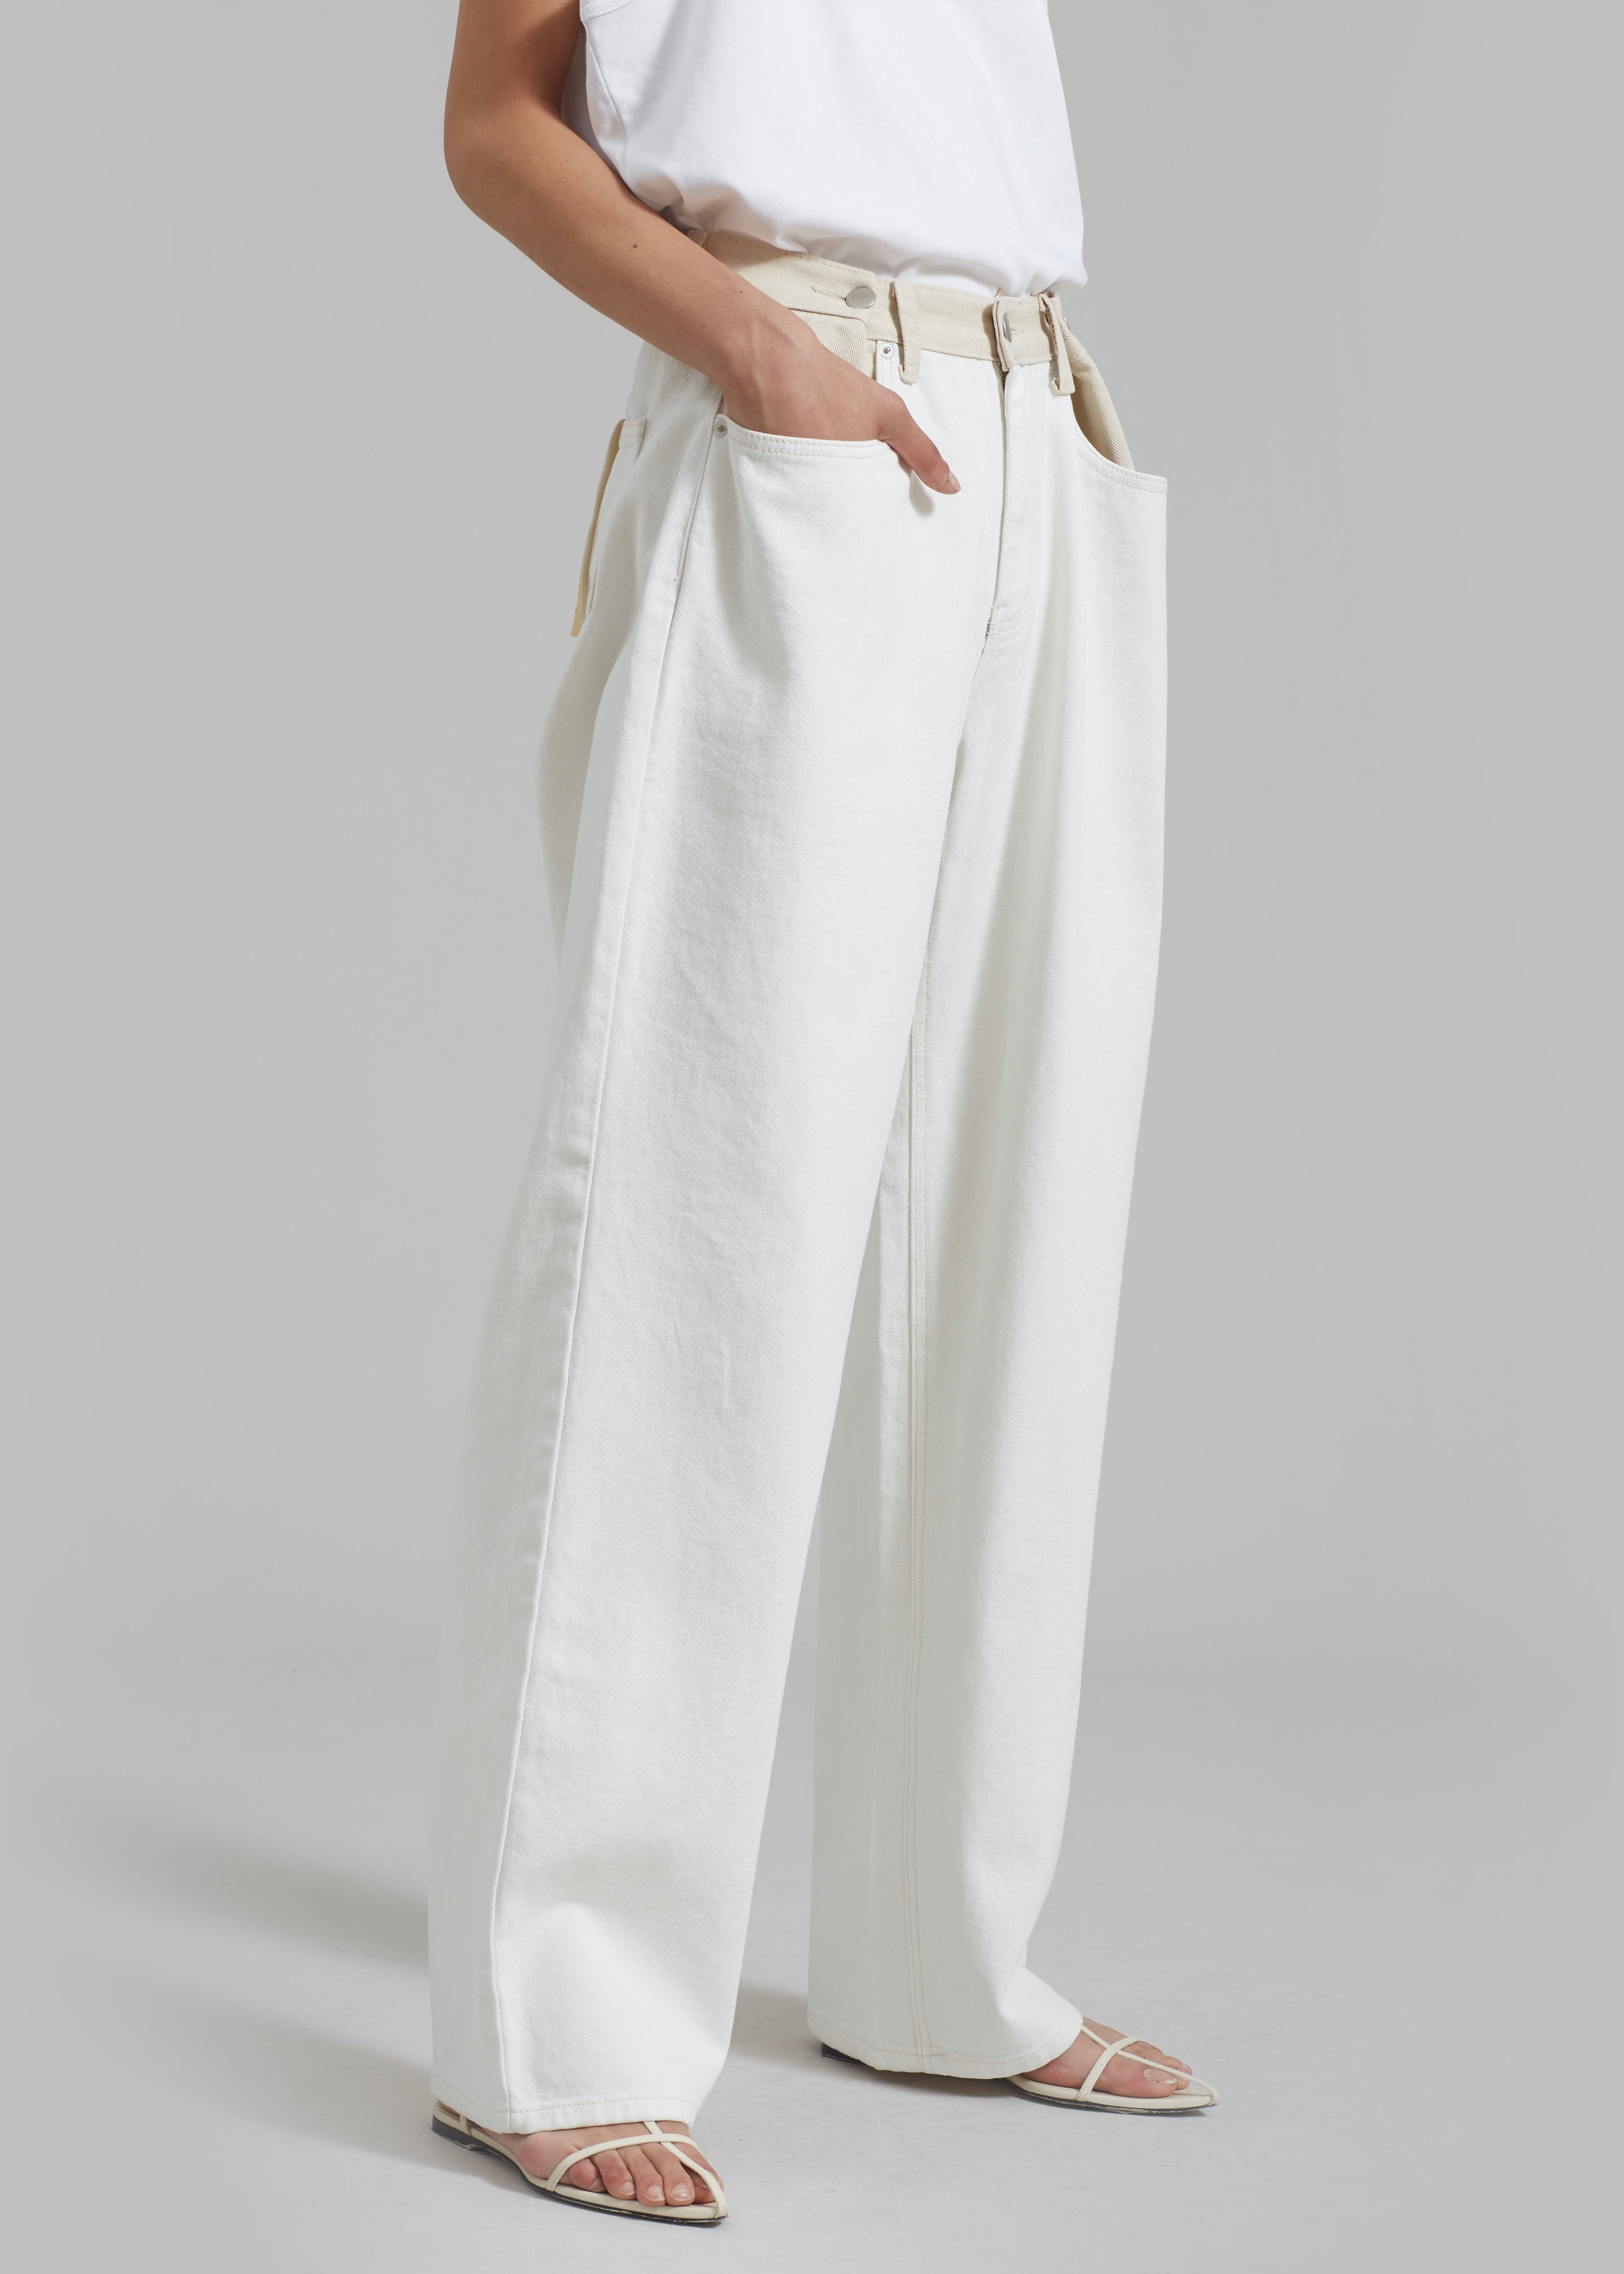 Hayla Contrast Denim Pants - Off White/Beige - 5